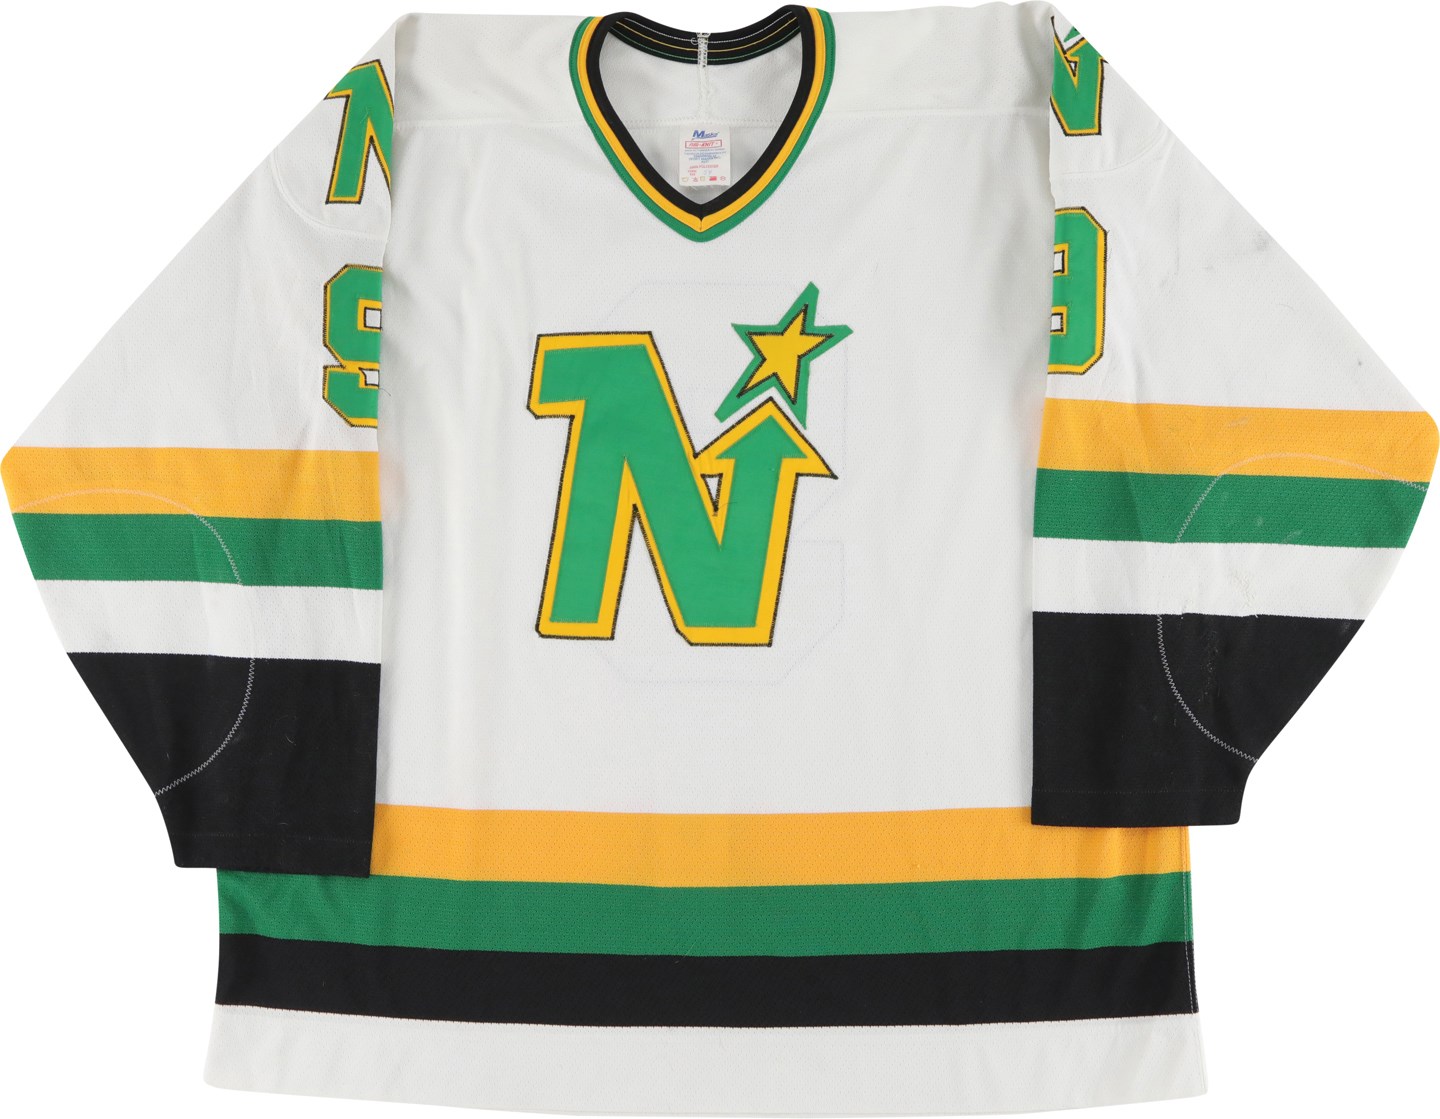 Hockey - 1990-91 Mike Modano Minnesota North Stars Game Worn Jersey